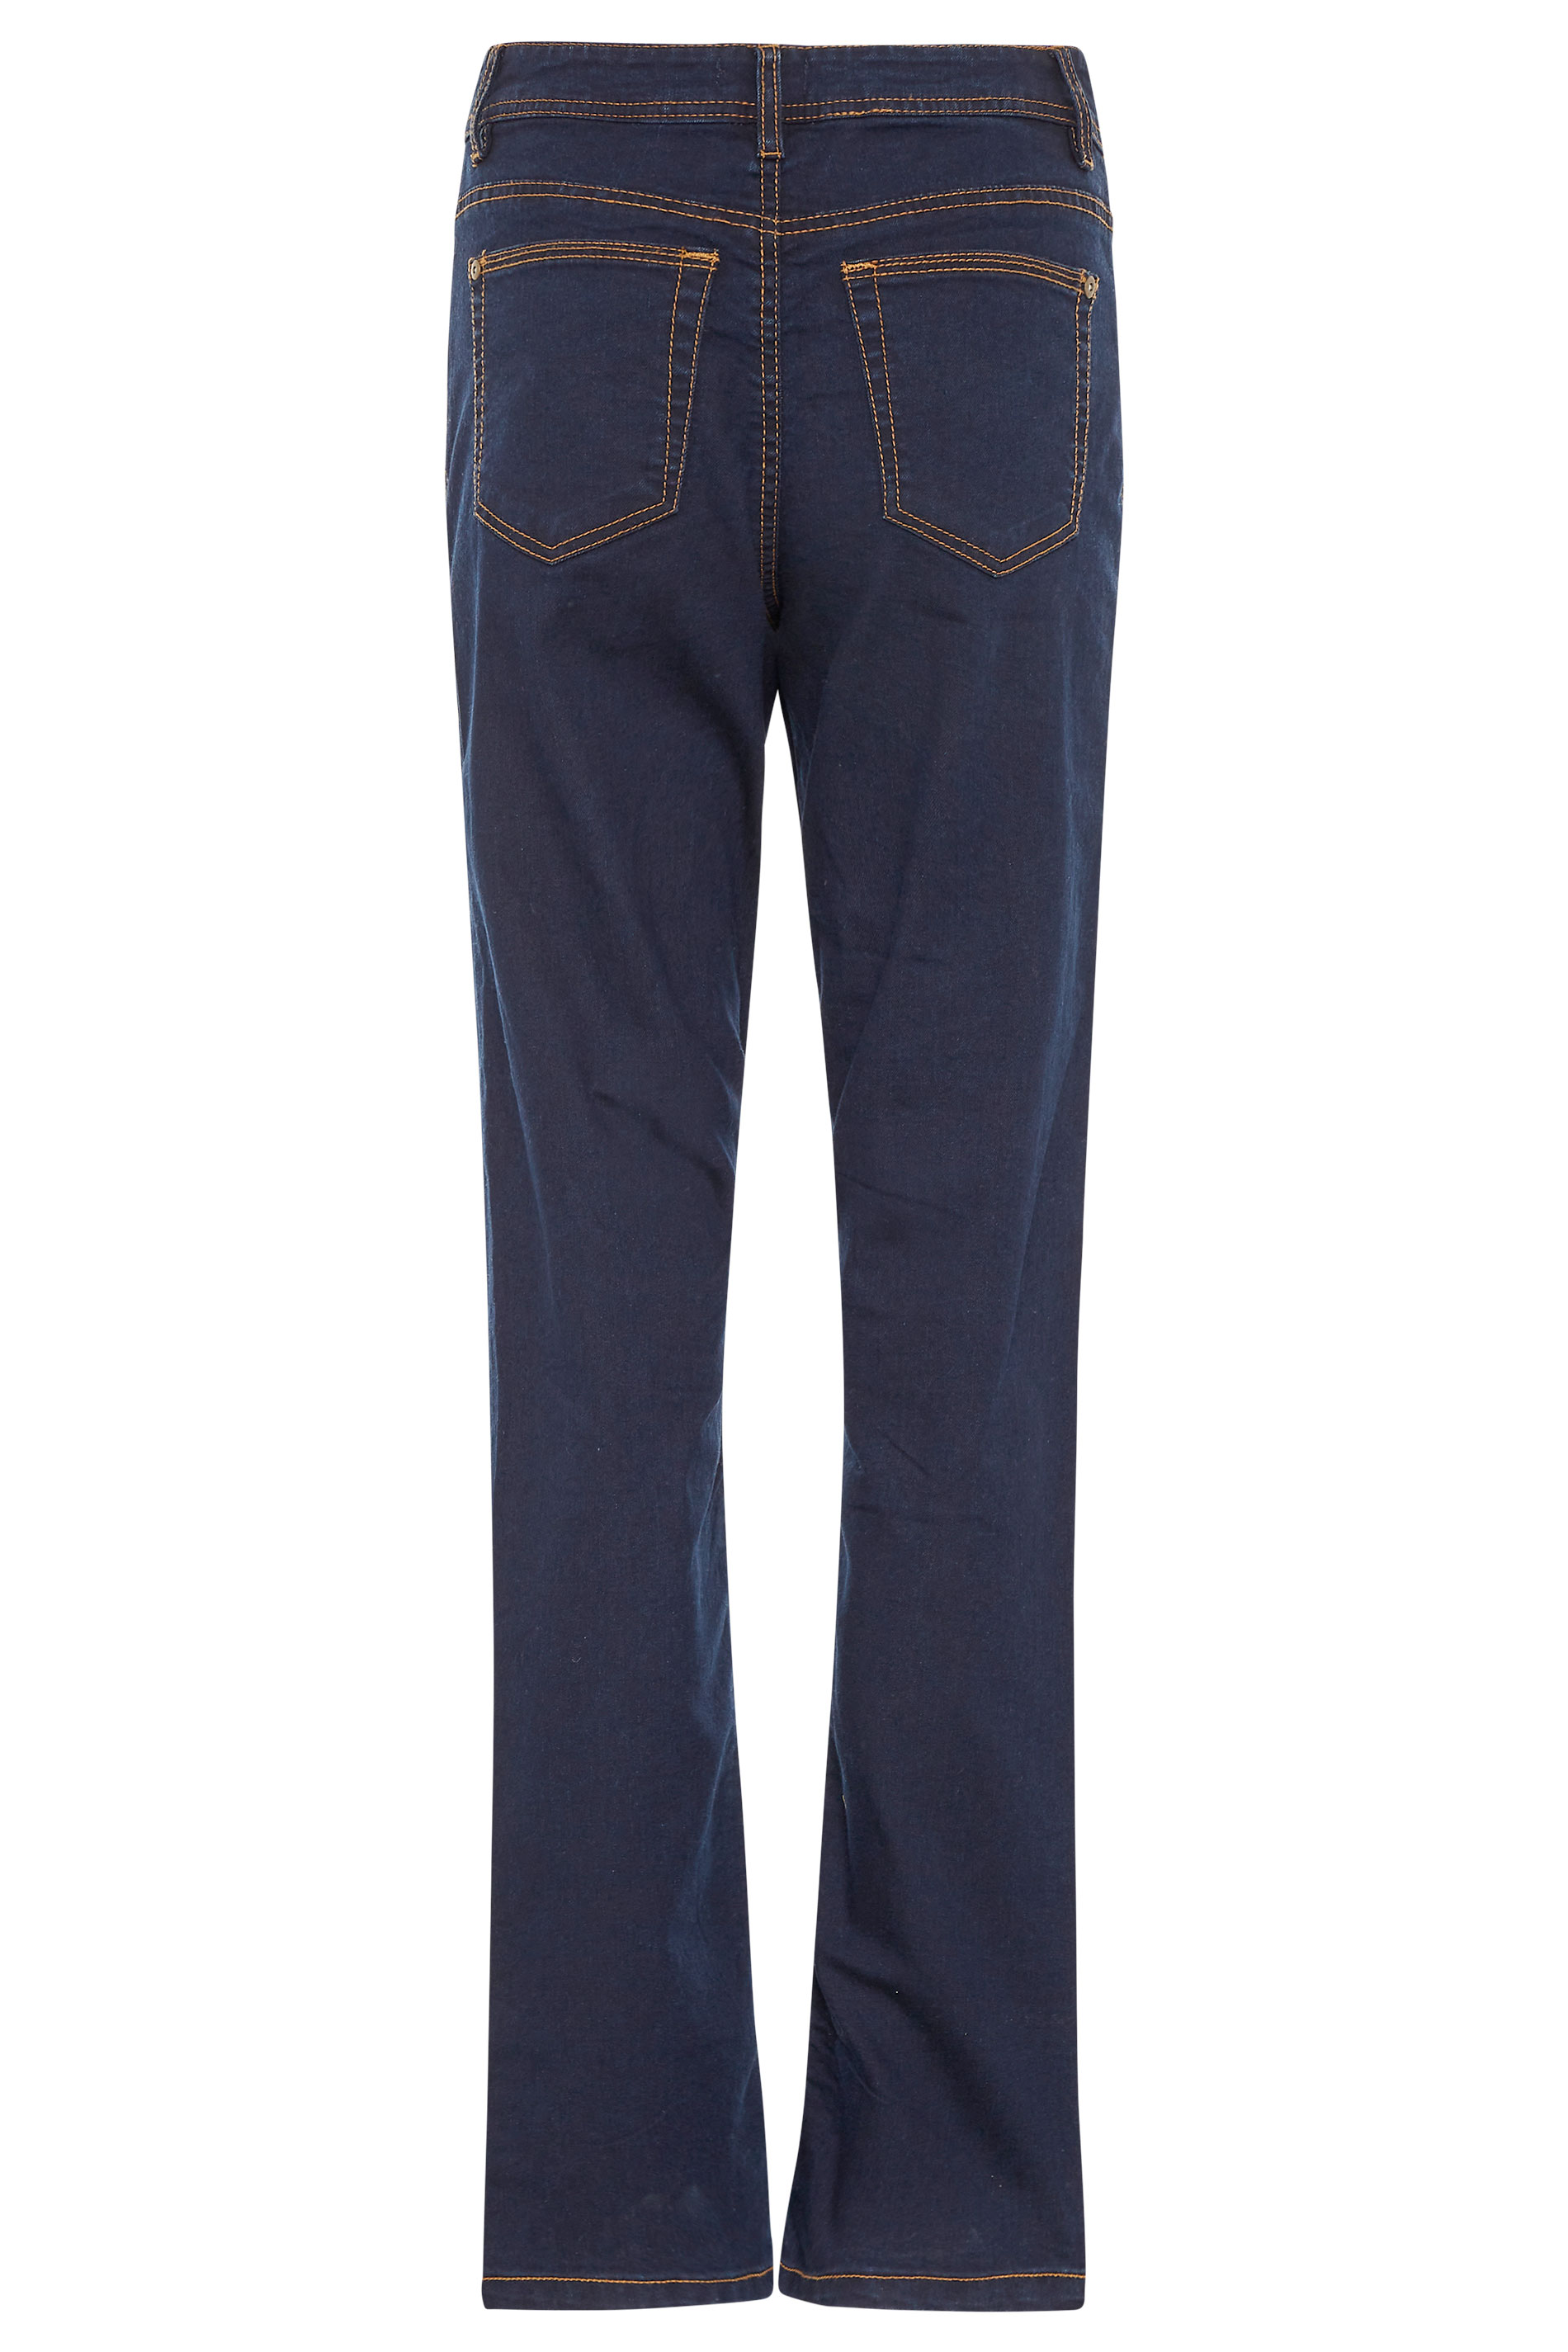 LTS Indigo Blue RAE Bootcut Jeans | Long Tall Sally